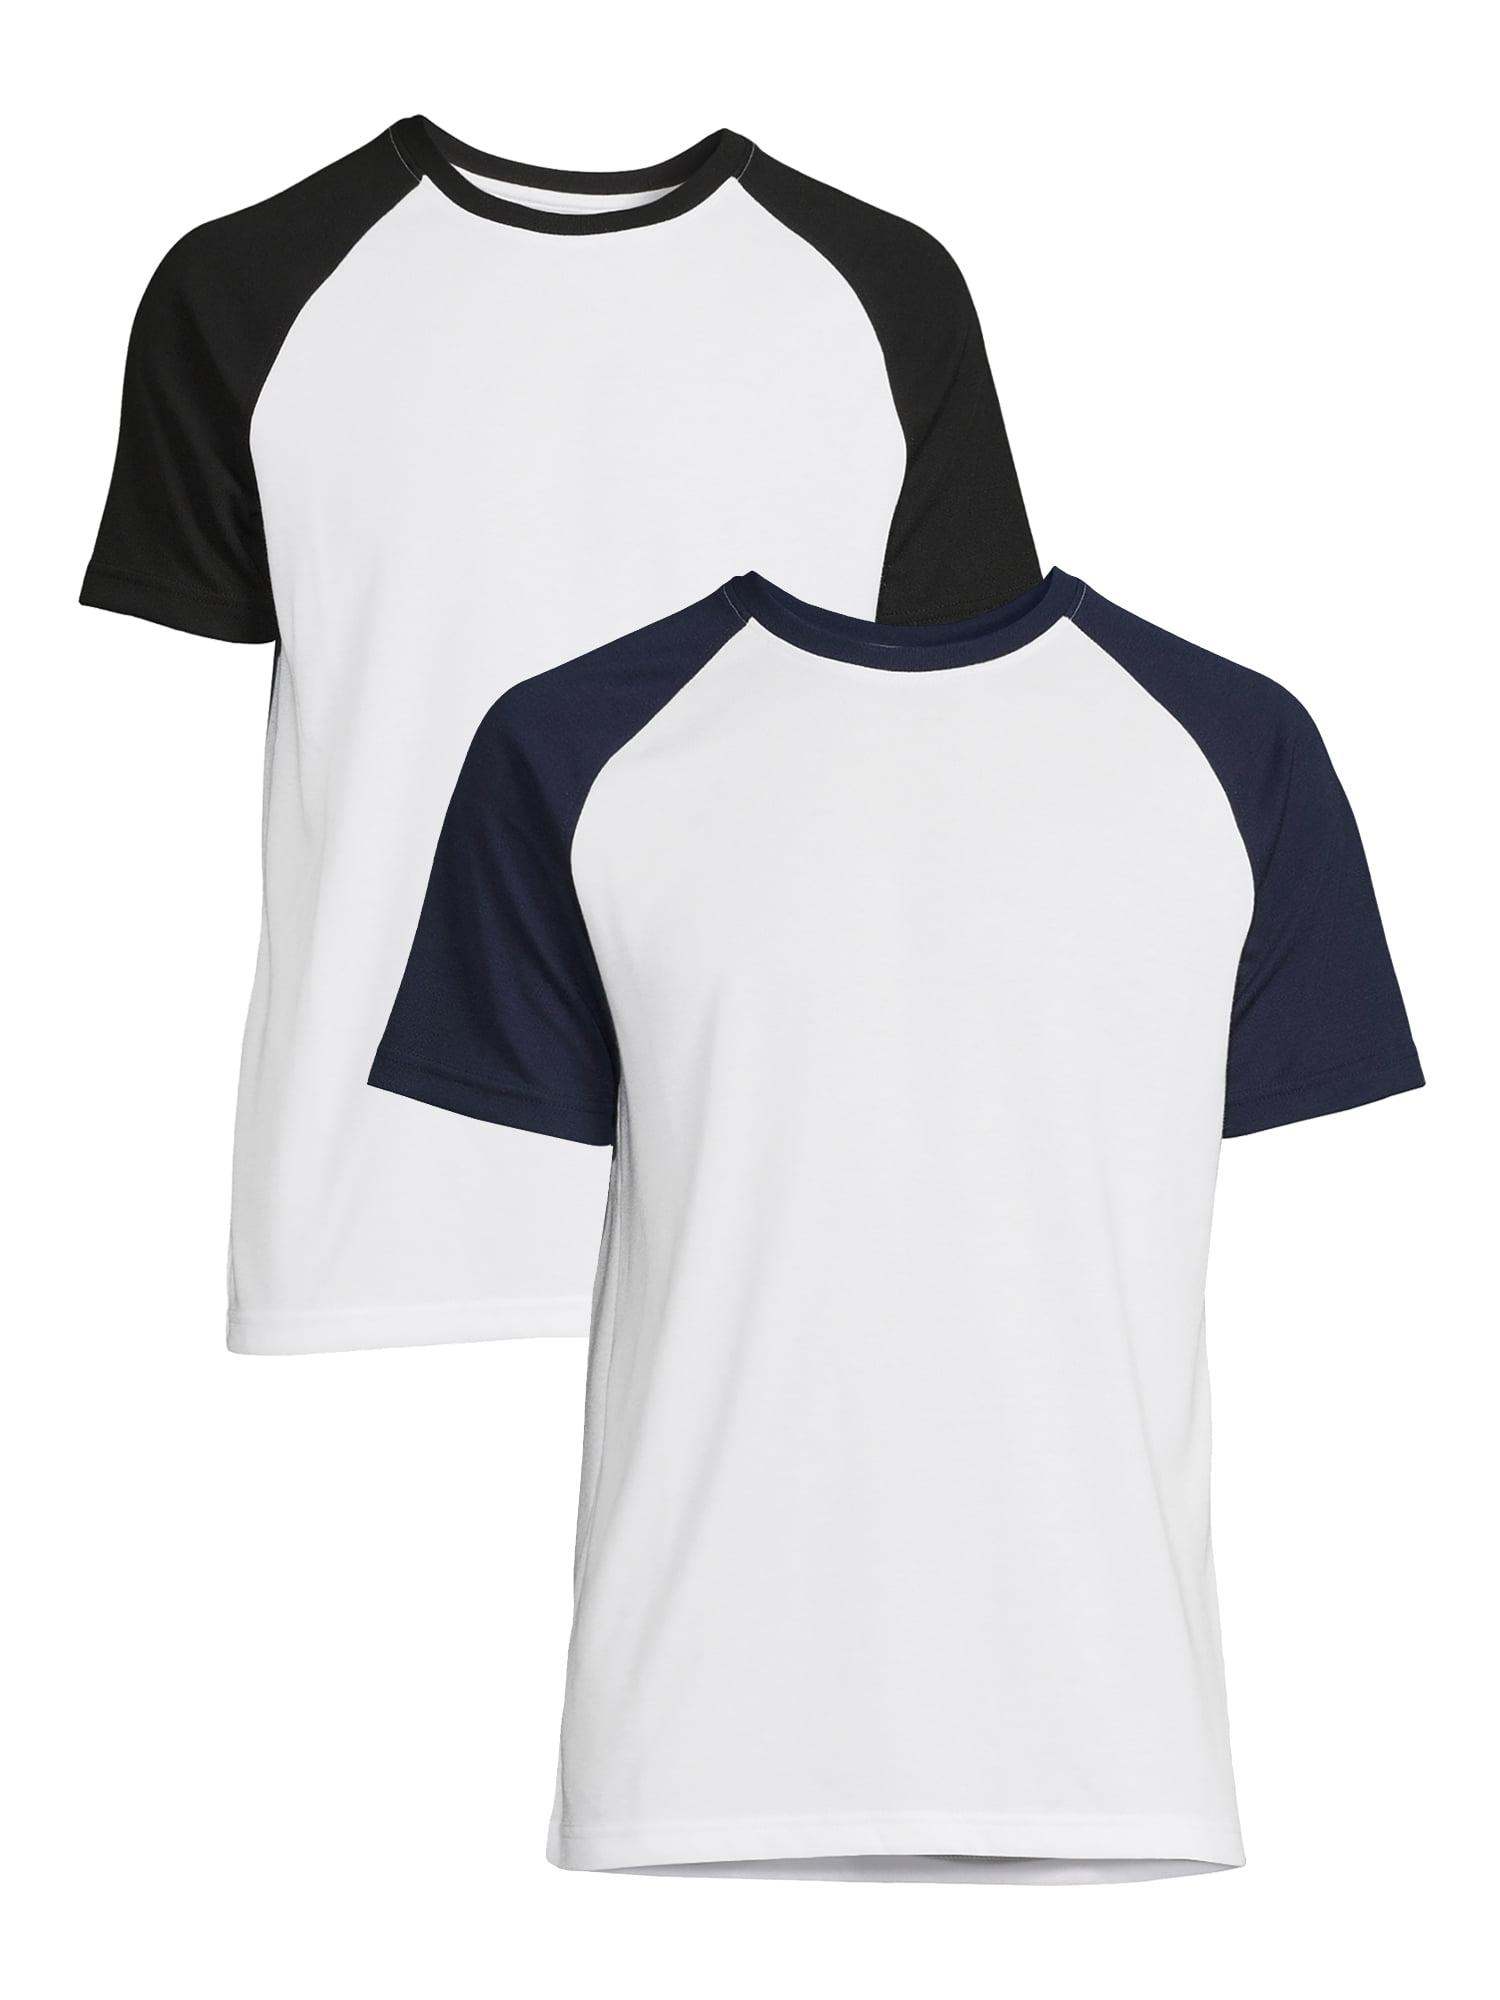 MY-Fish Black Raglan T-Shirts Short Sleeve Wild & One Sports Sweat Tee for Kids Boys Girls 